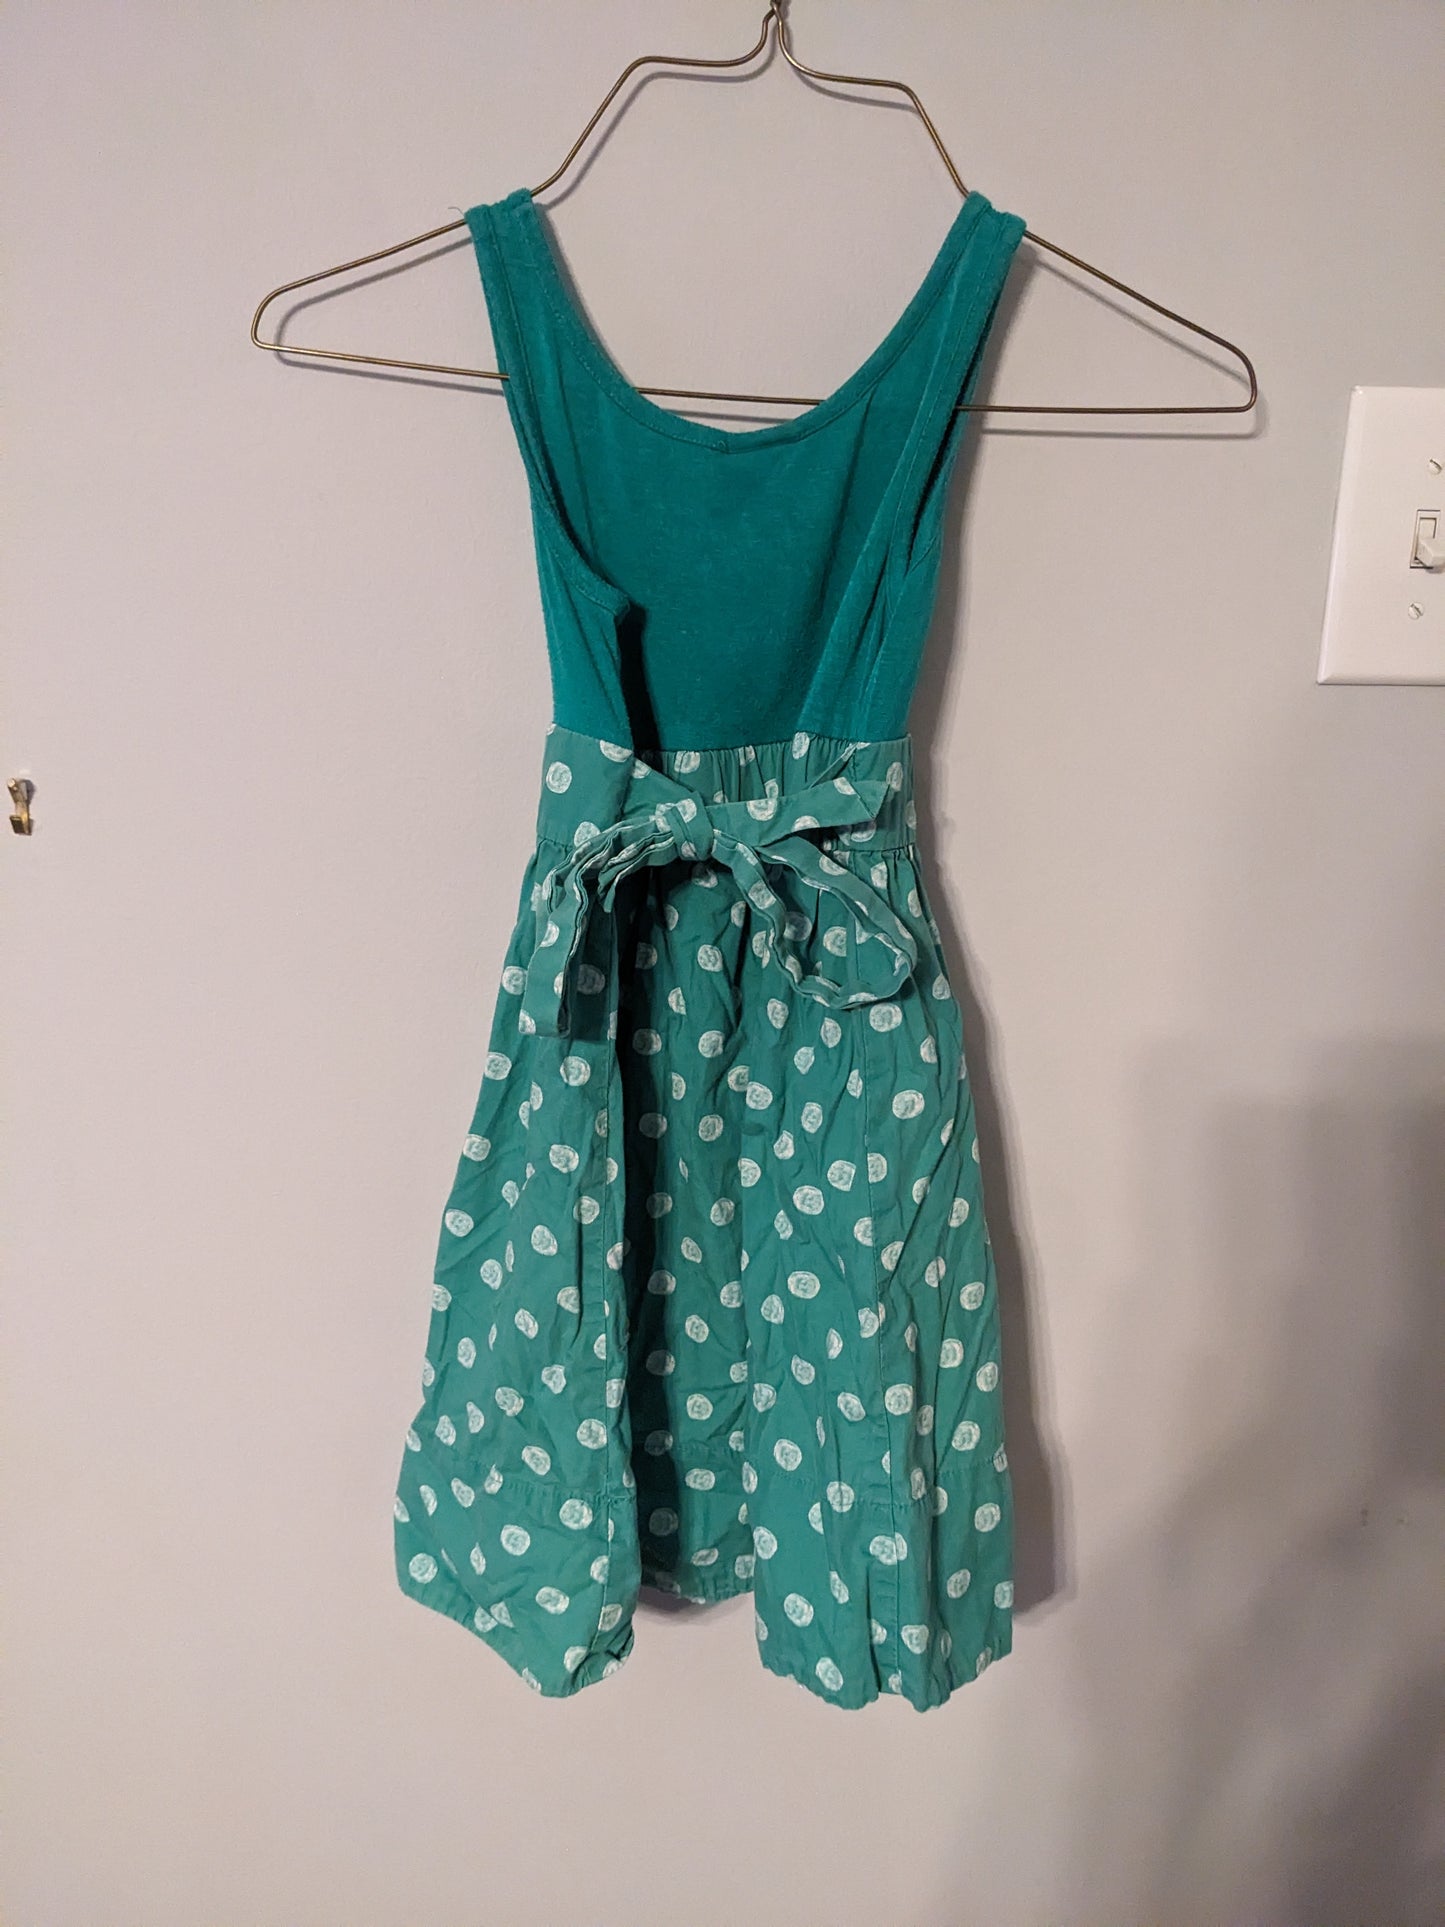 Green polka dot dress size 3t